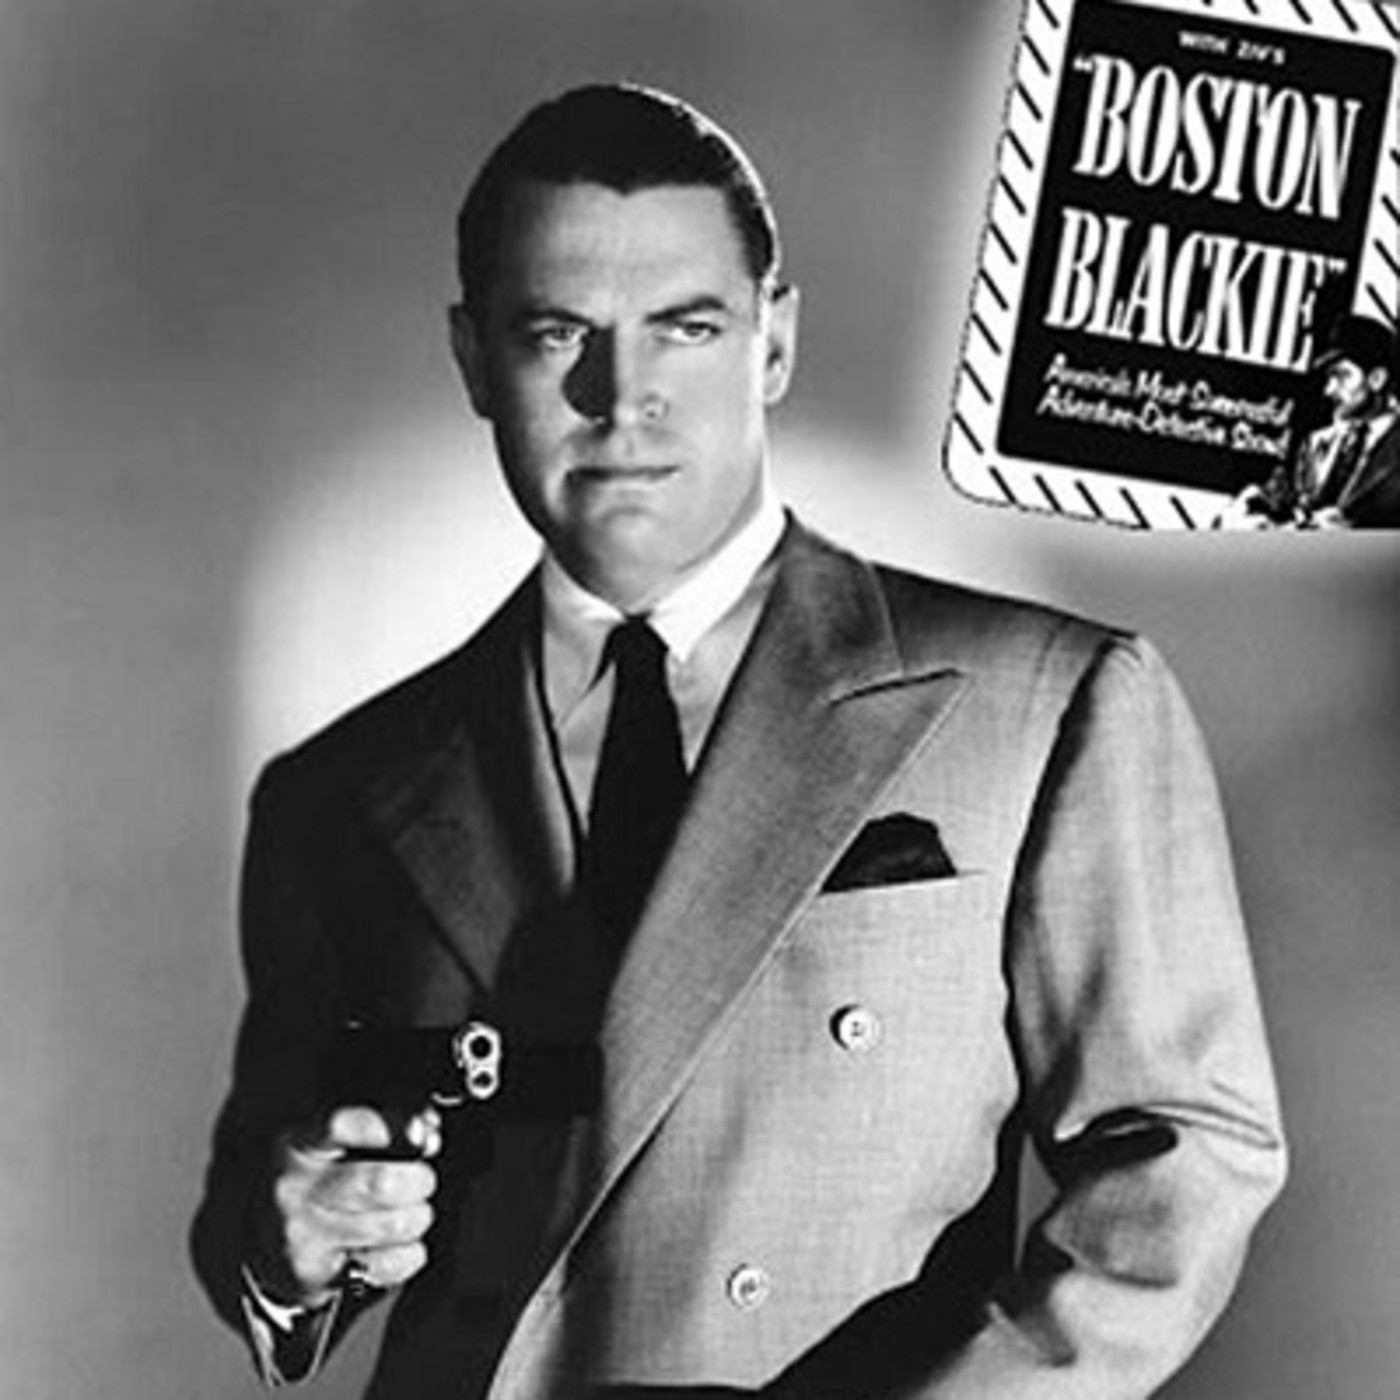 Boston Blackie - Dynamite Thompson and Jack Morgan, Contractors - 224